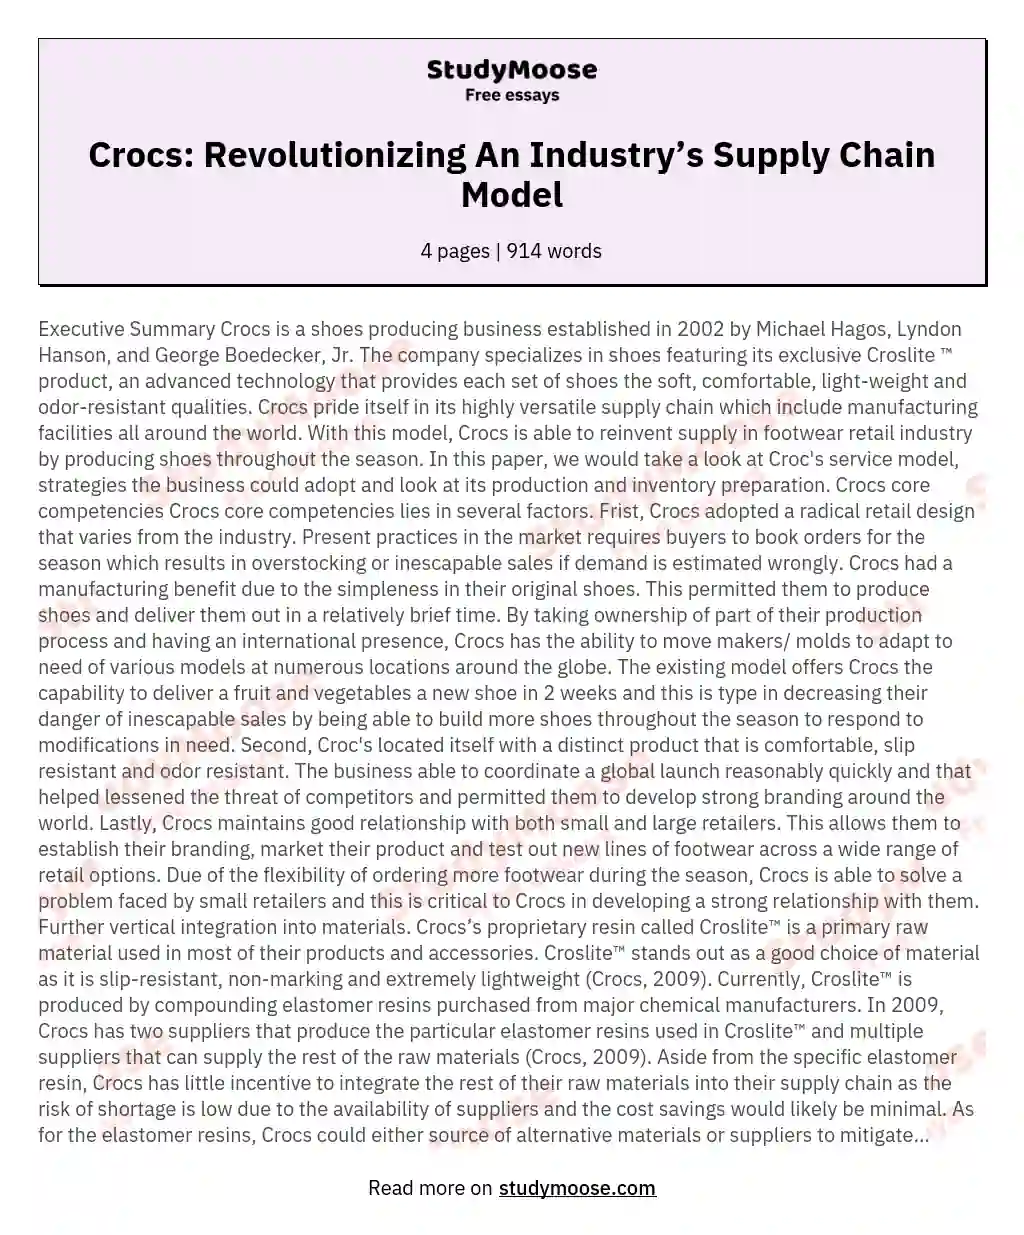 Crocs: Revolutionizing An Industry’s Supply Chain Model essay